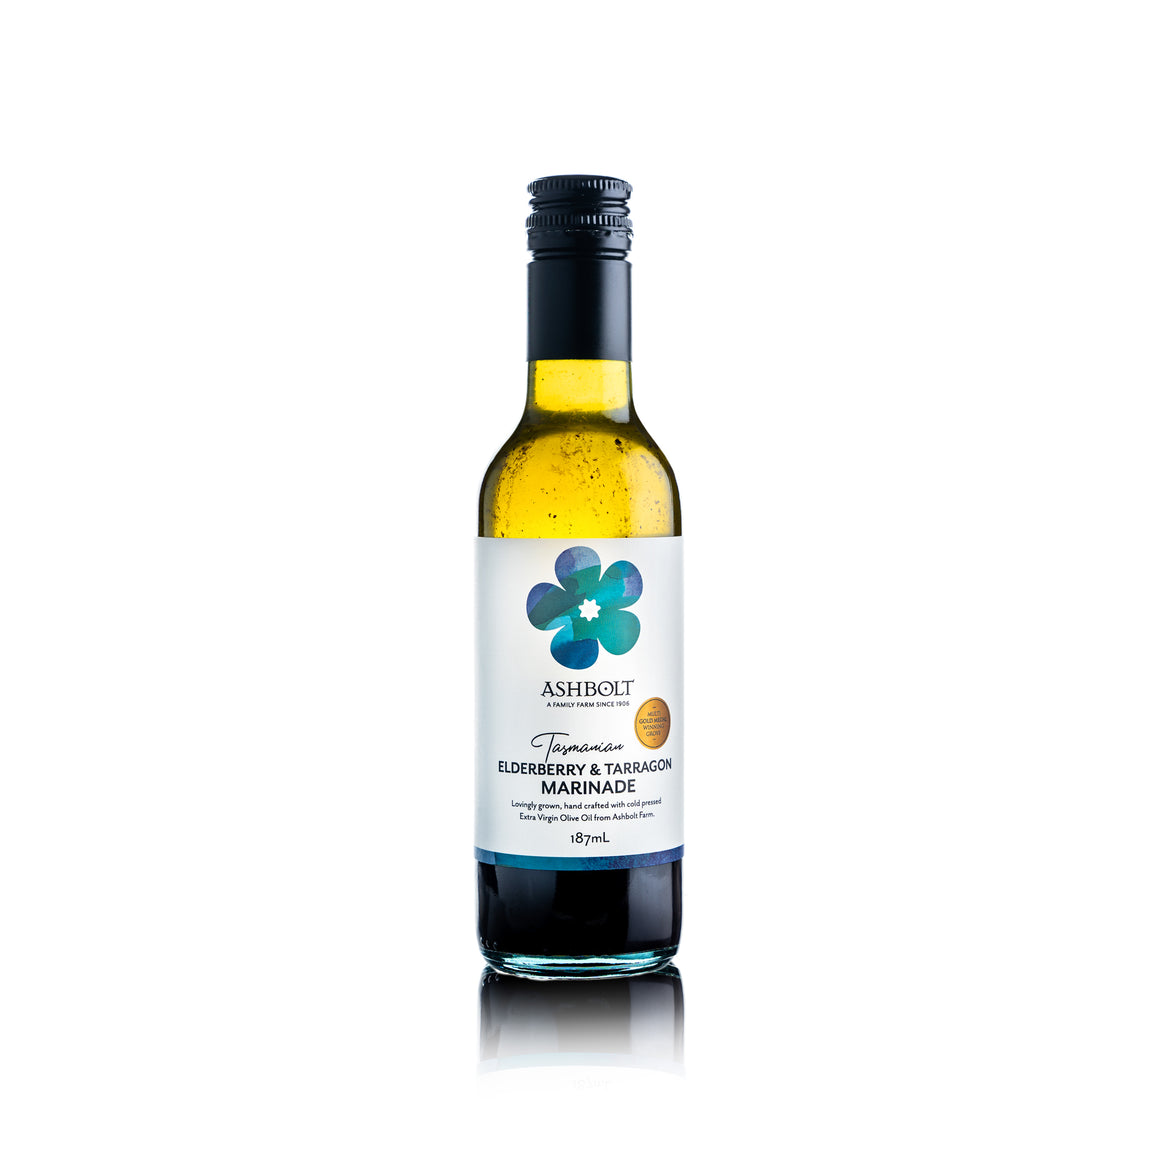 Ashbolt Elderberry and Tarragon Marinade in bottle